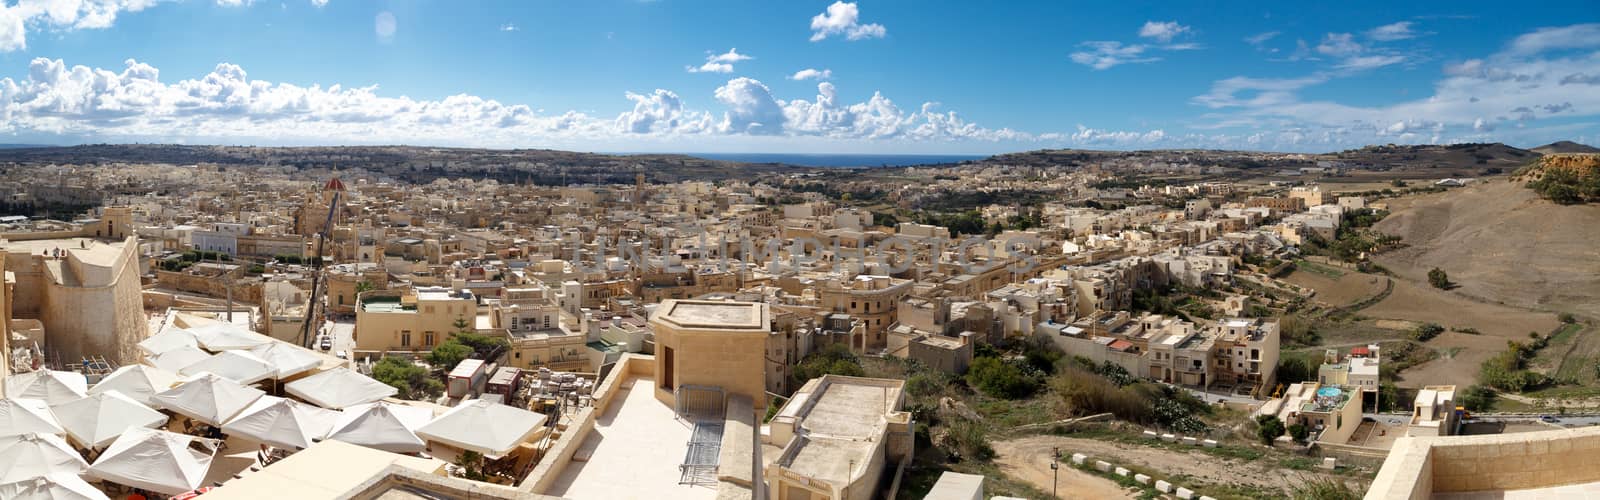 Malta Victoria View by niglaynike